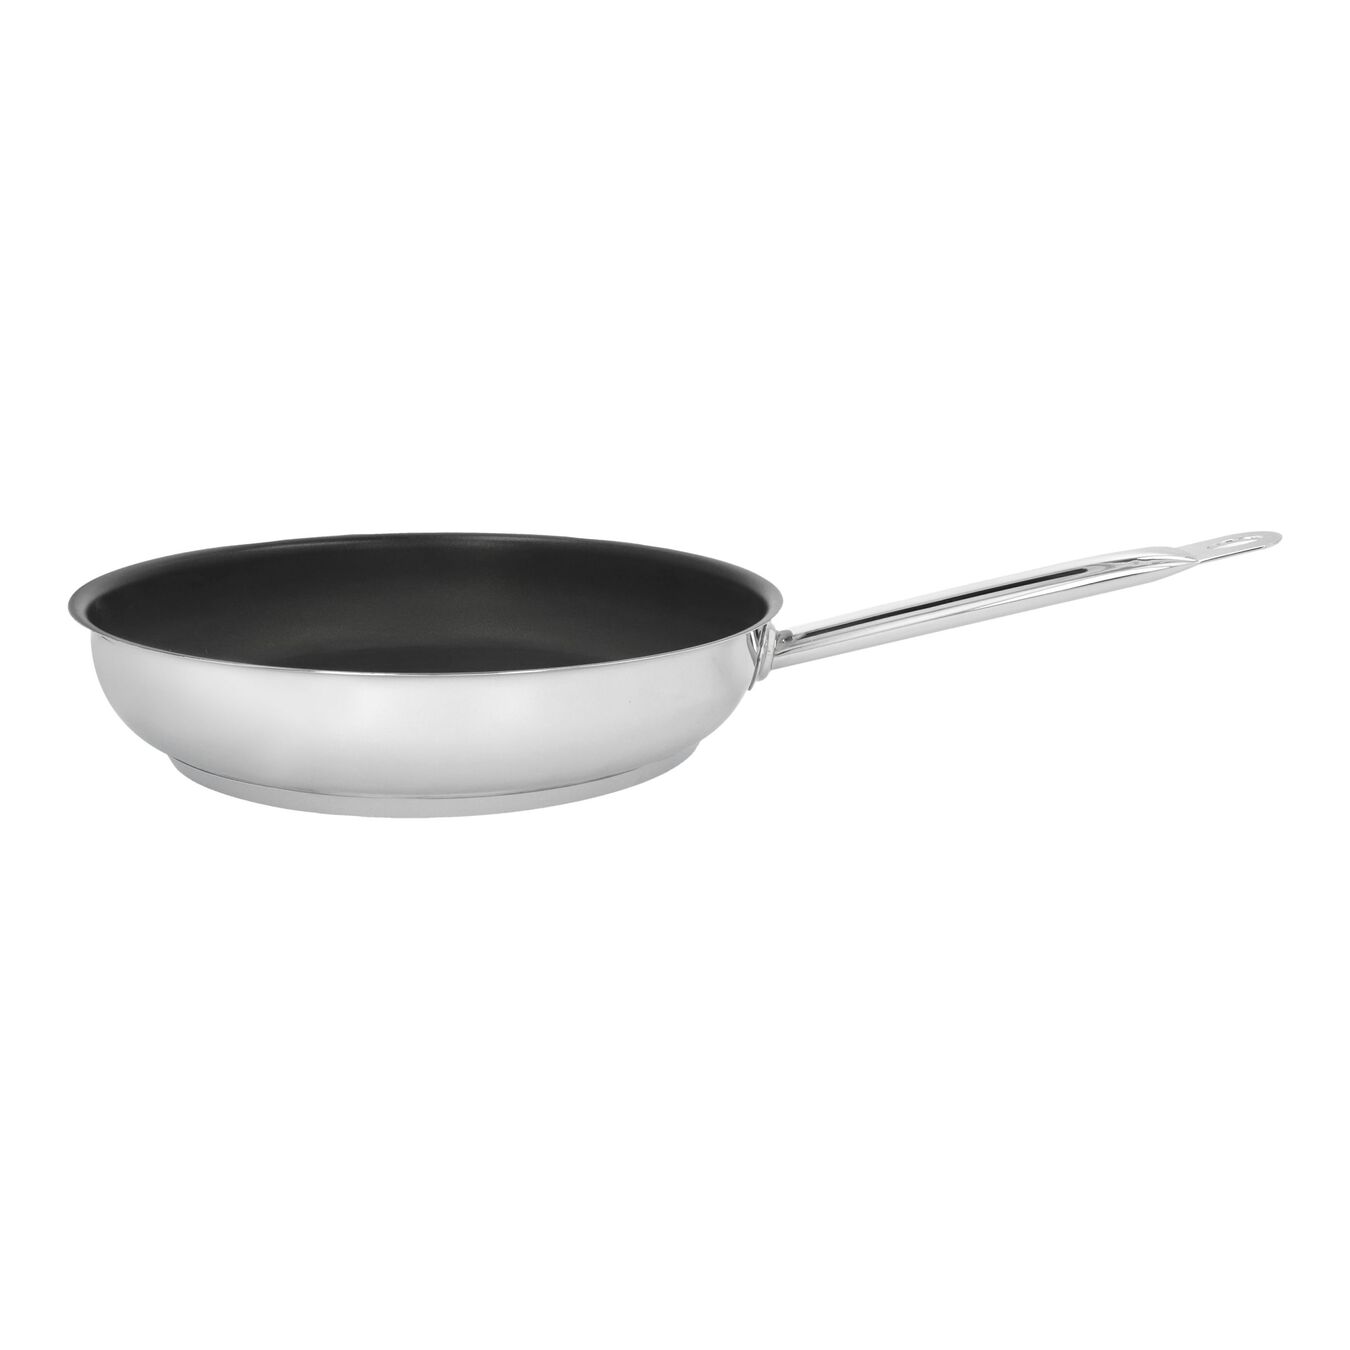 32 cm 18/10 Stainless Steel Frying pan silver-black,,large 1